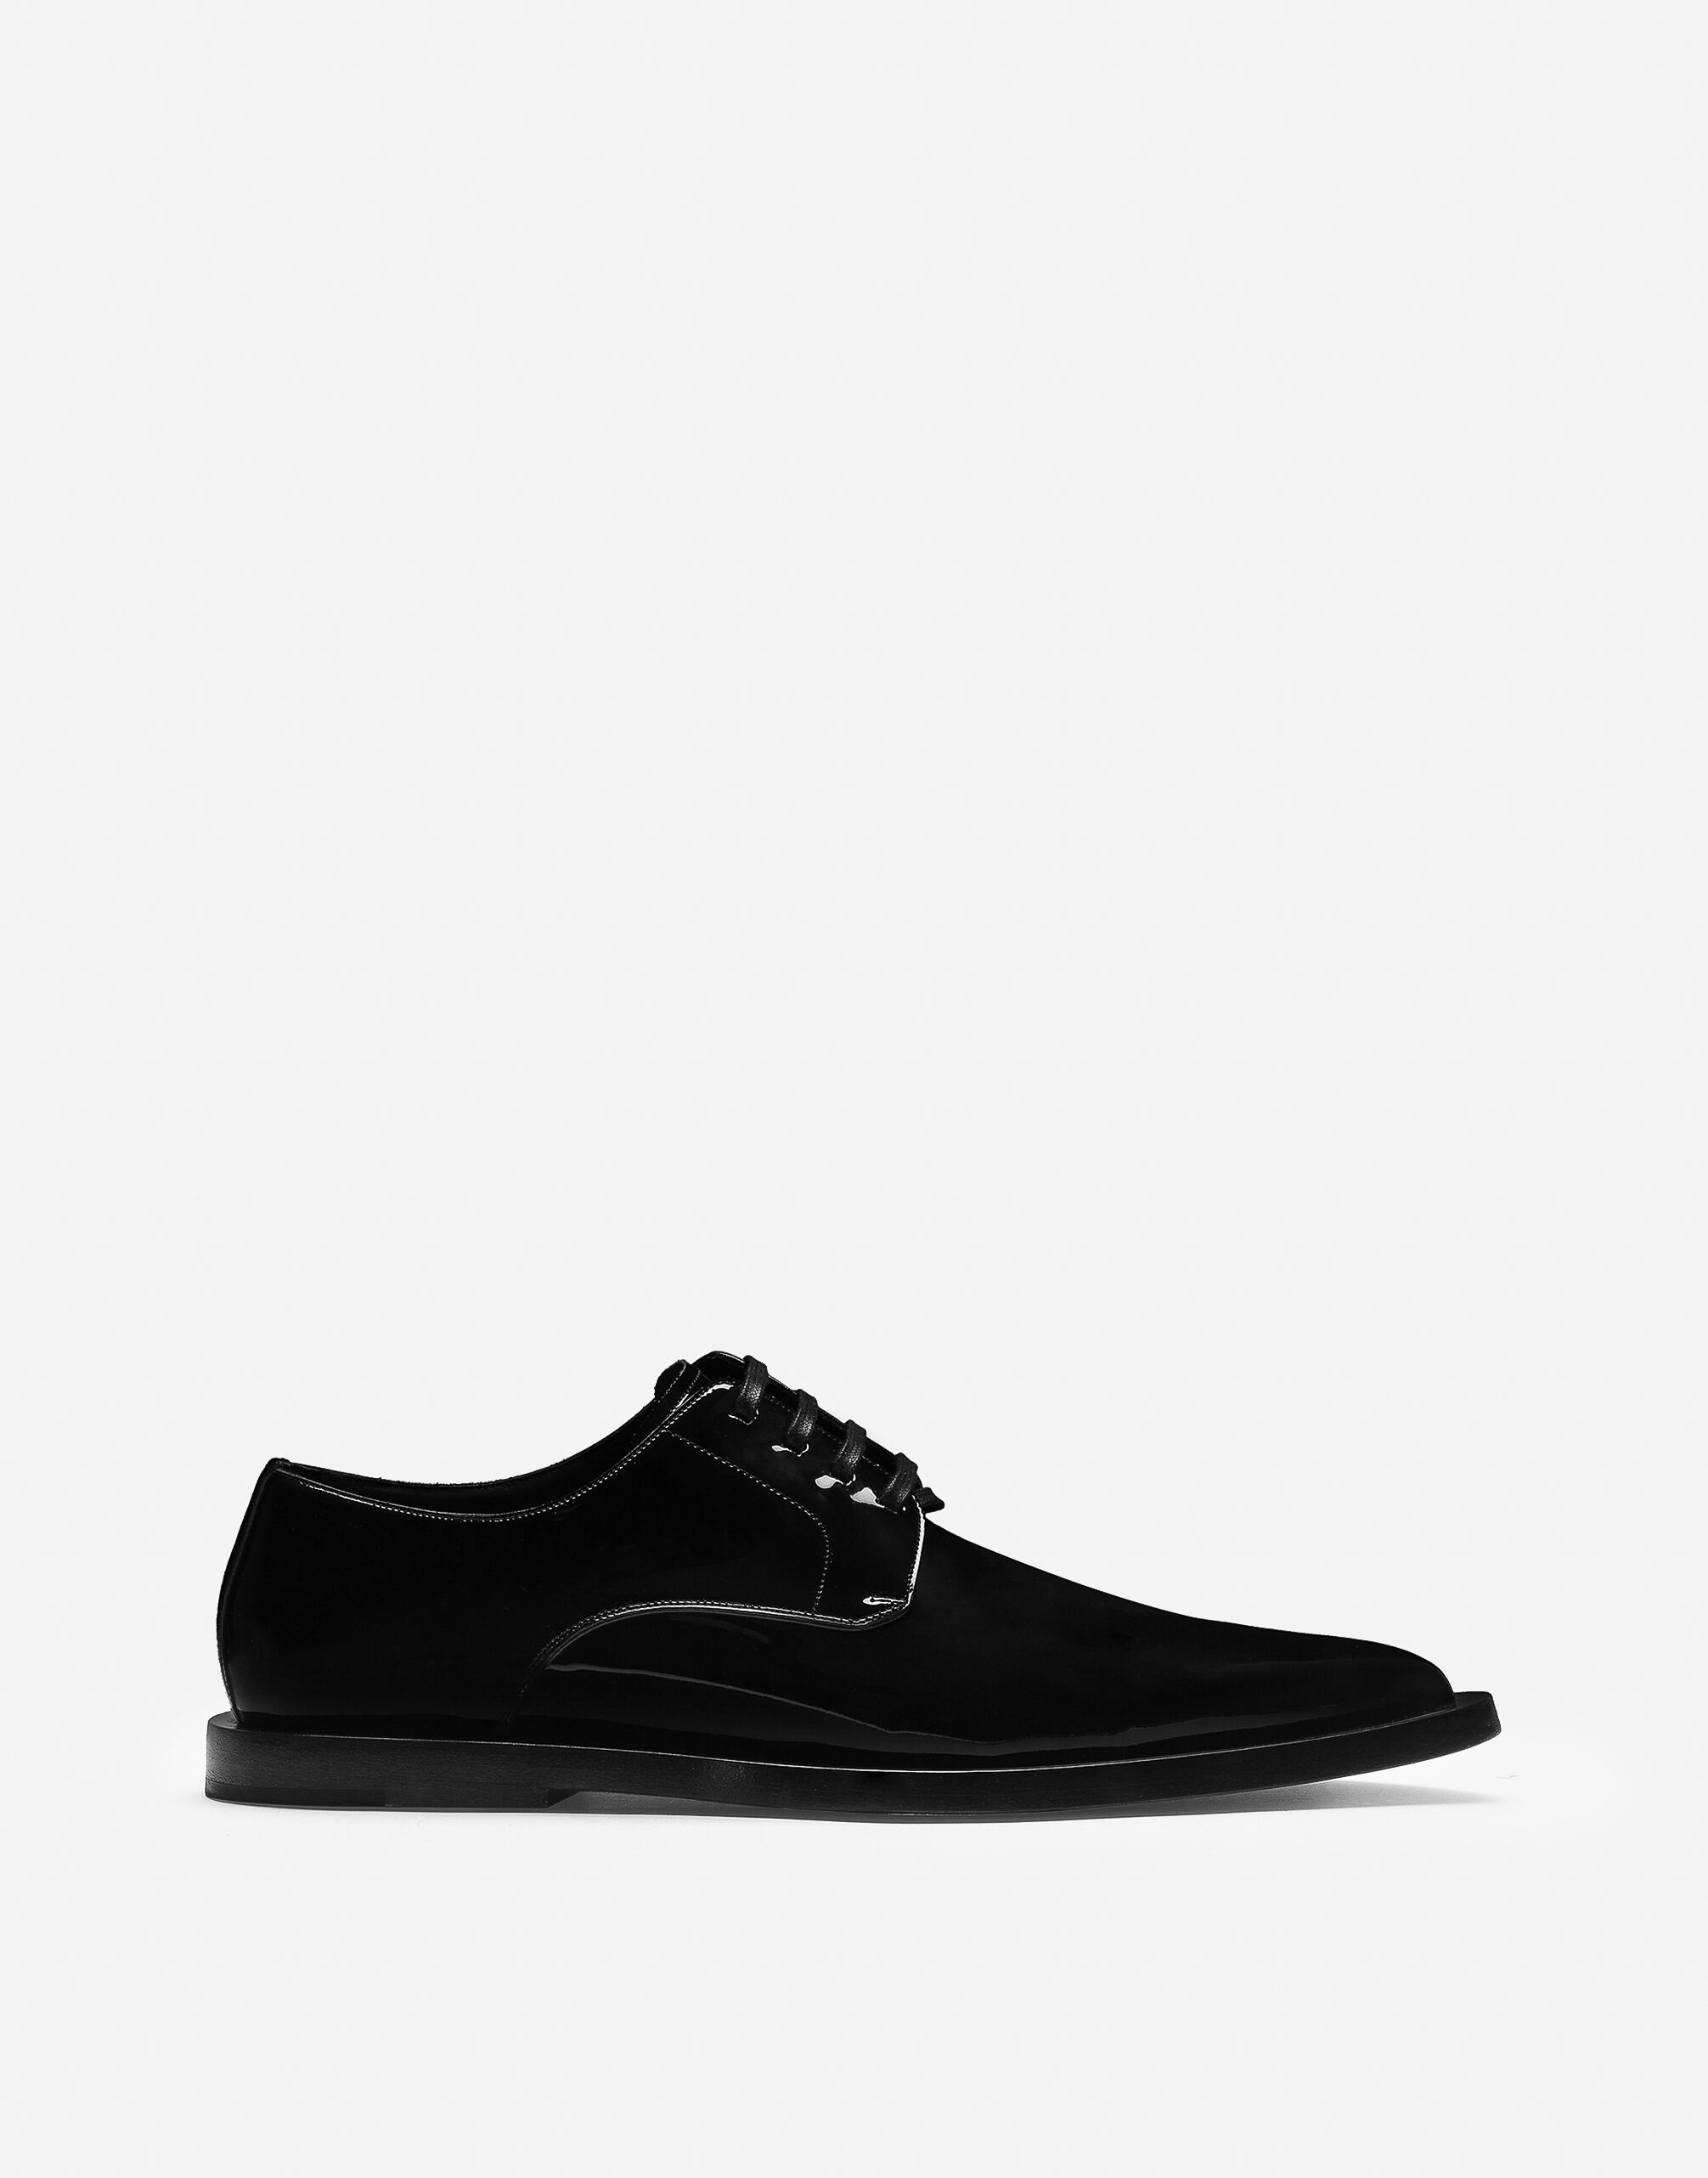 Dolce & Gabbana Patent leather Derby shoes Black G2RR4TFLSIM